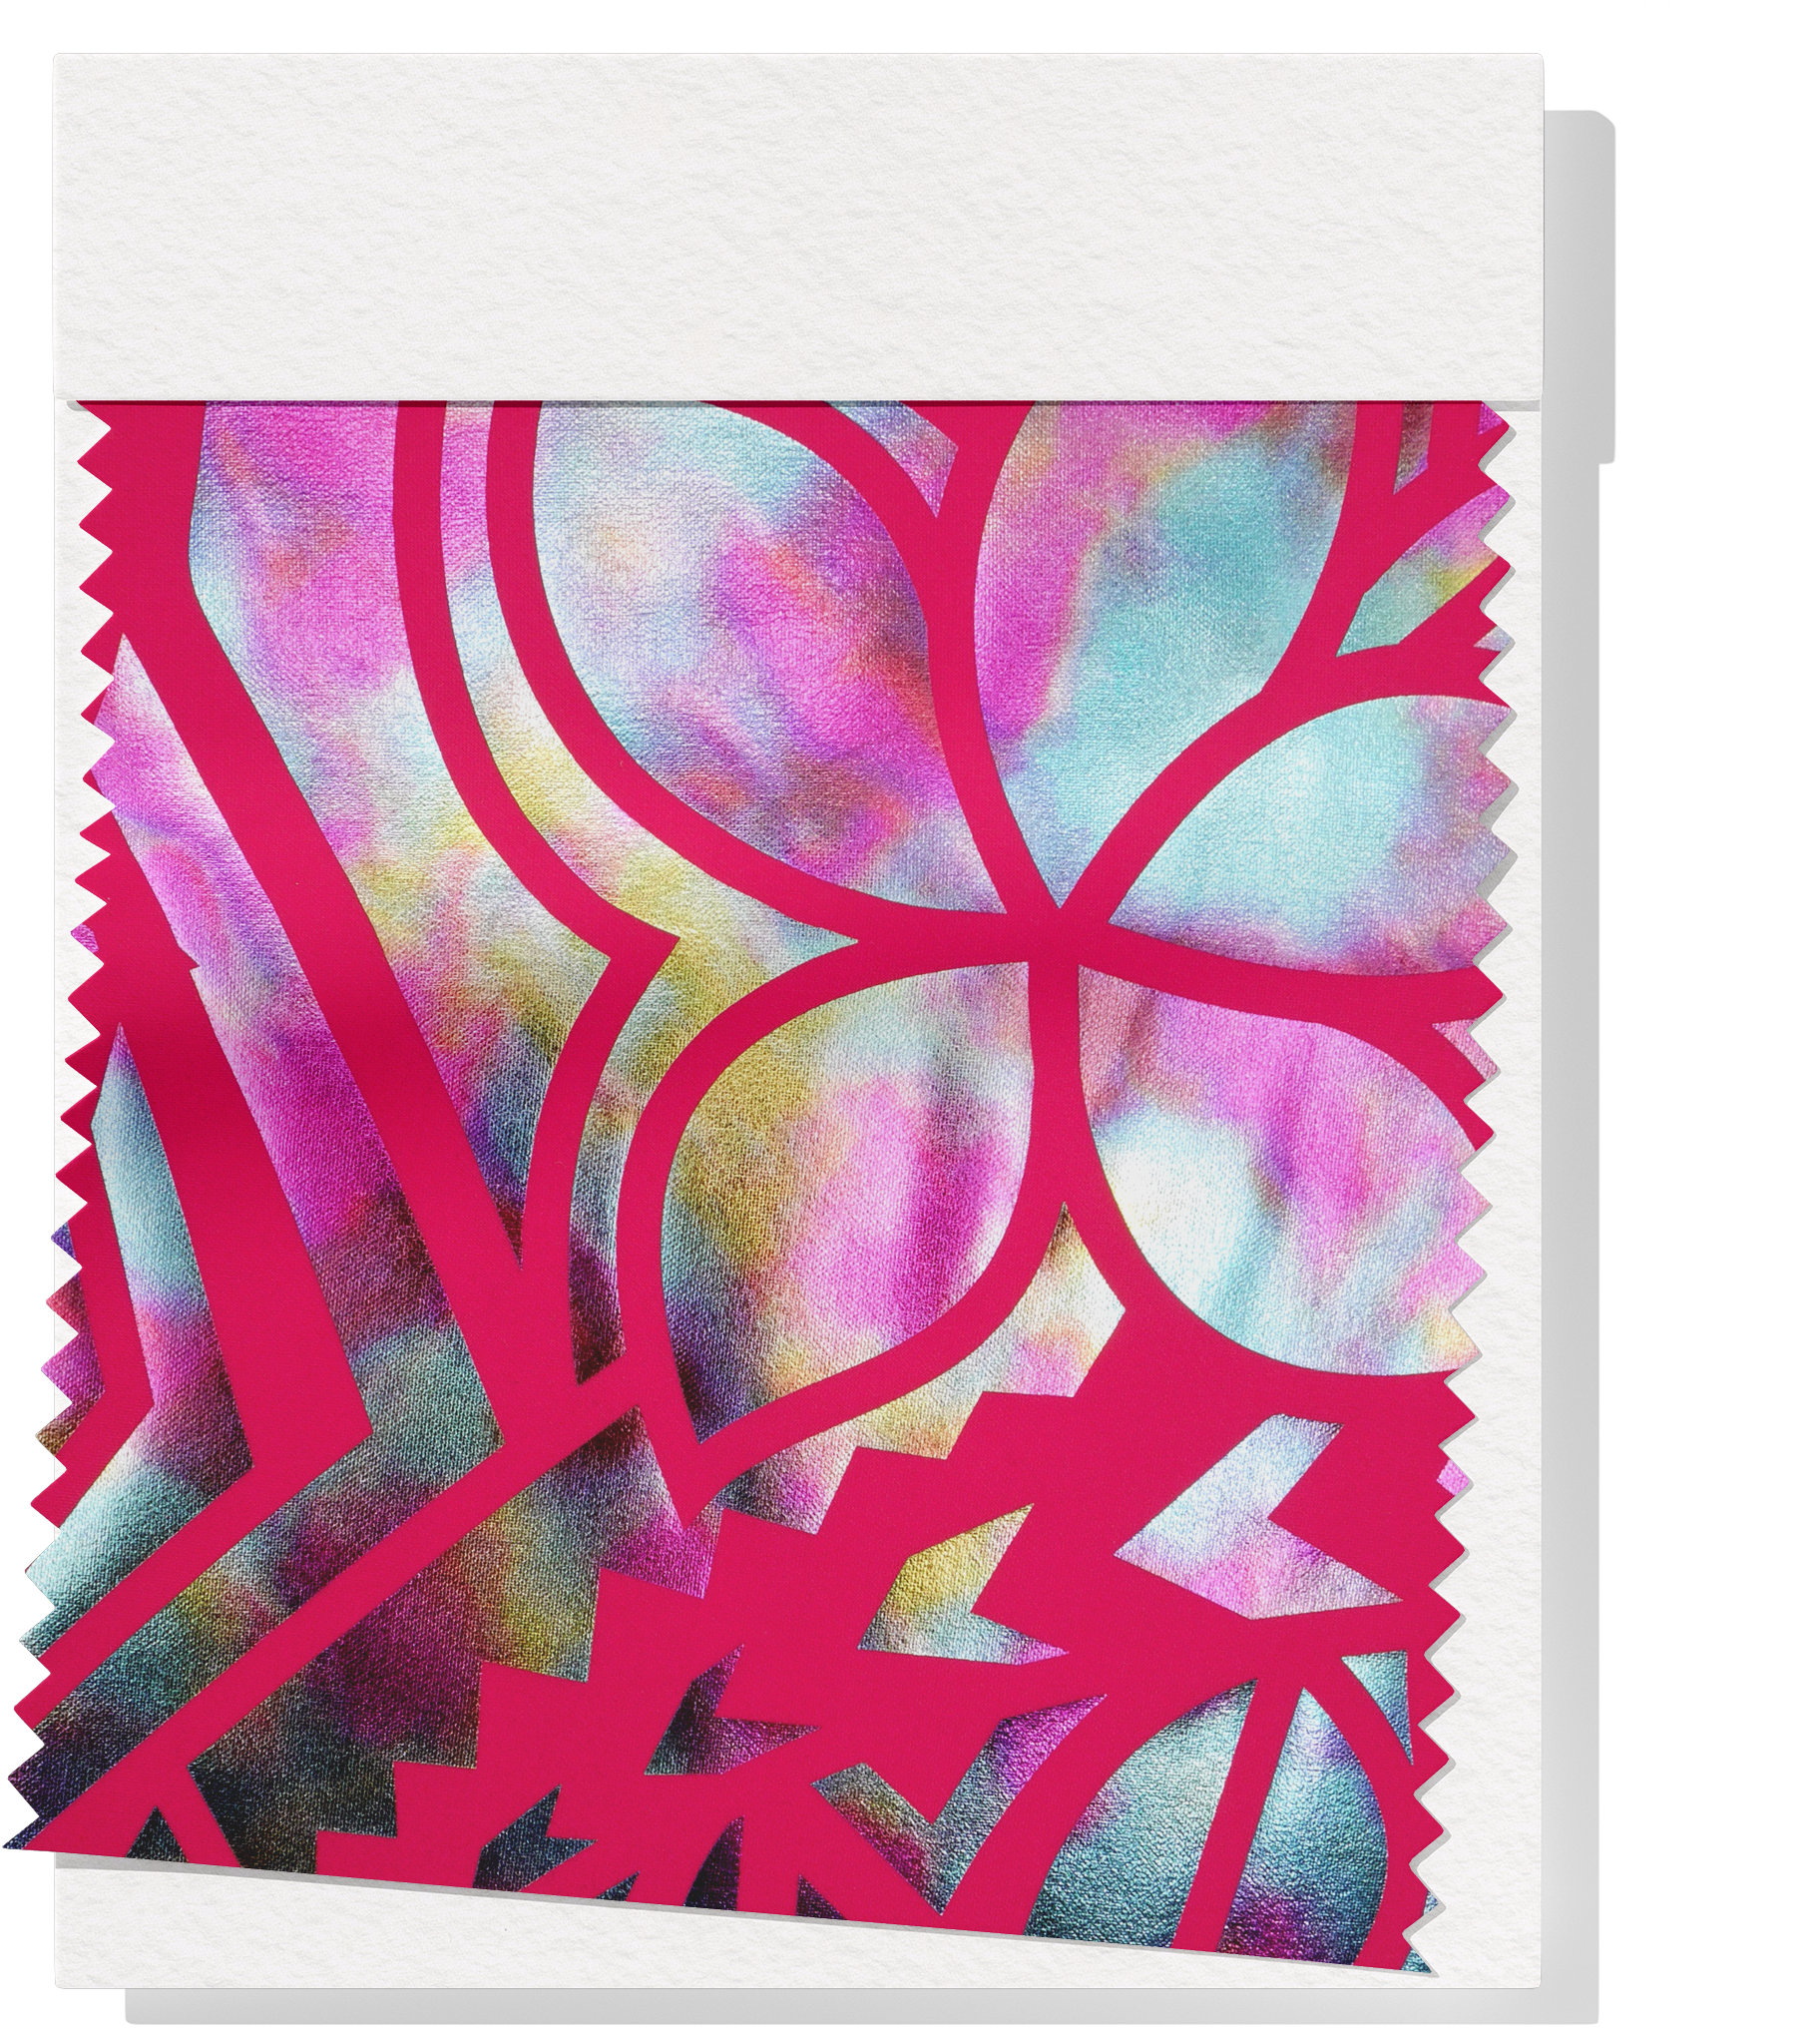 Stretch Polyester Pacific Print $12.00p/m Design #7 - Pink Rainbow